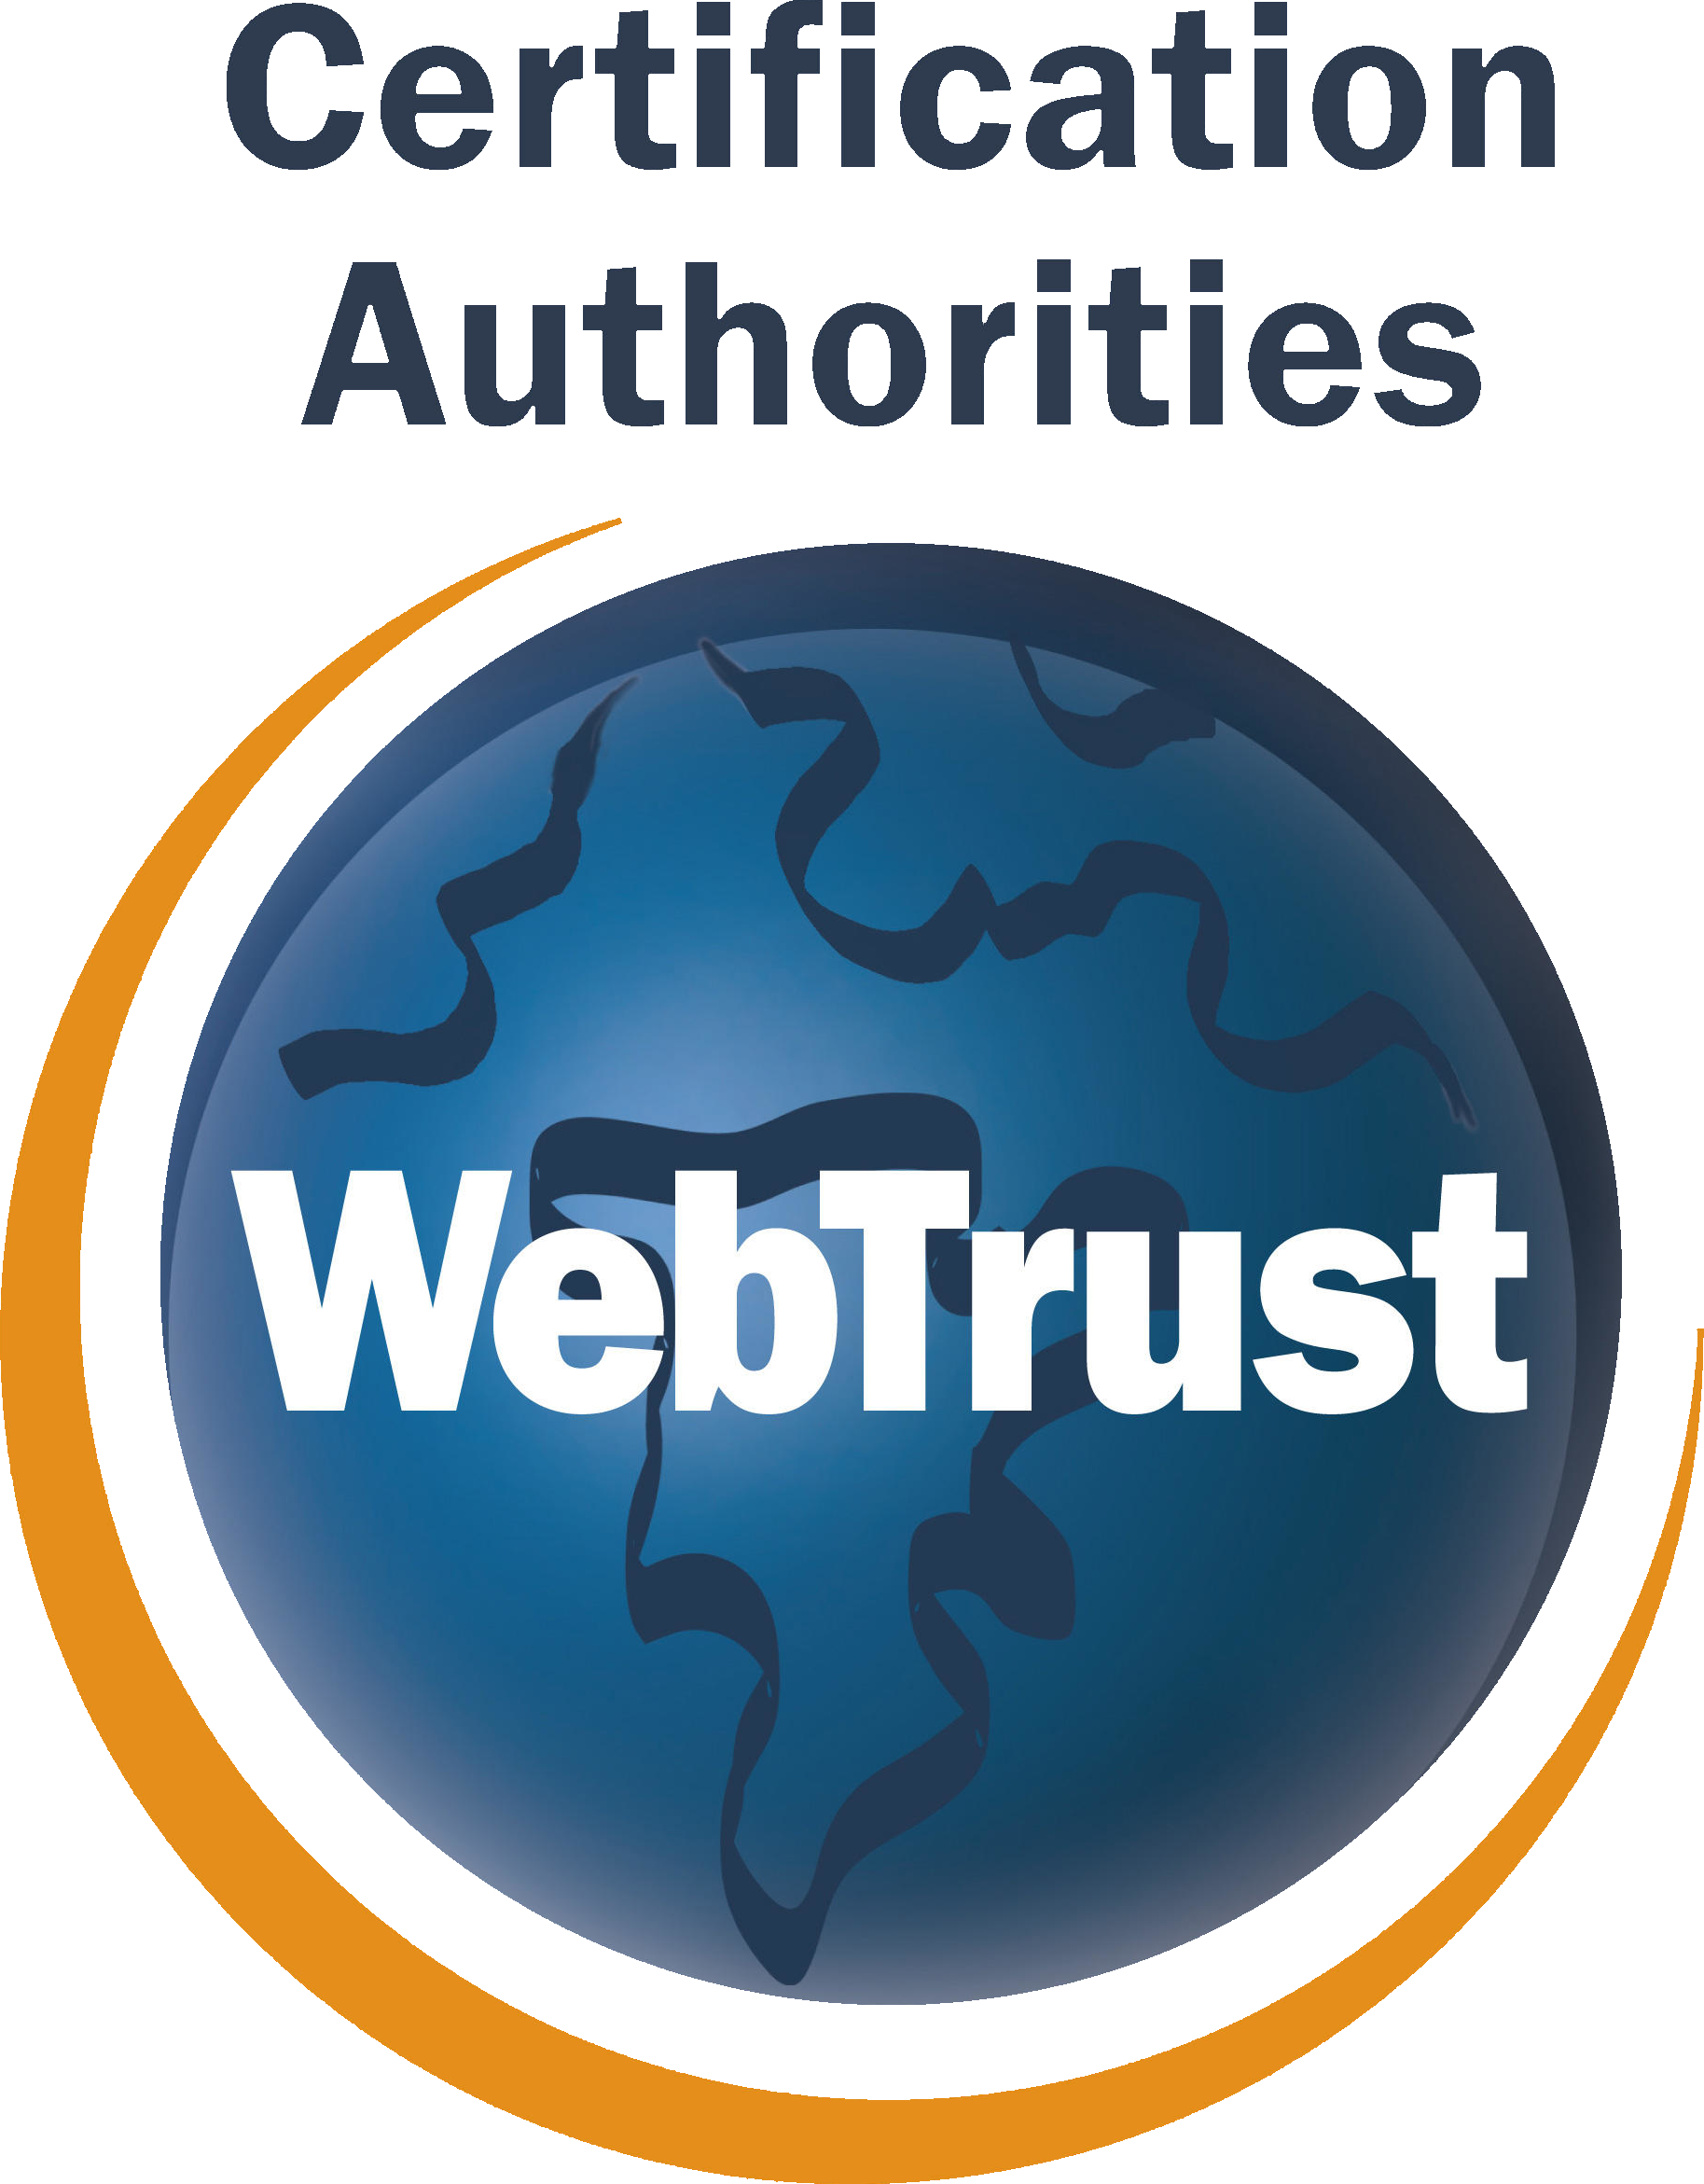 Certification Authority WEBTRUST